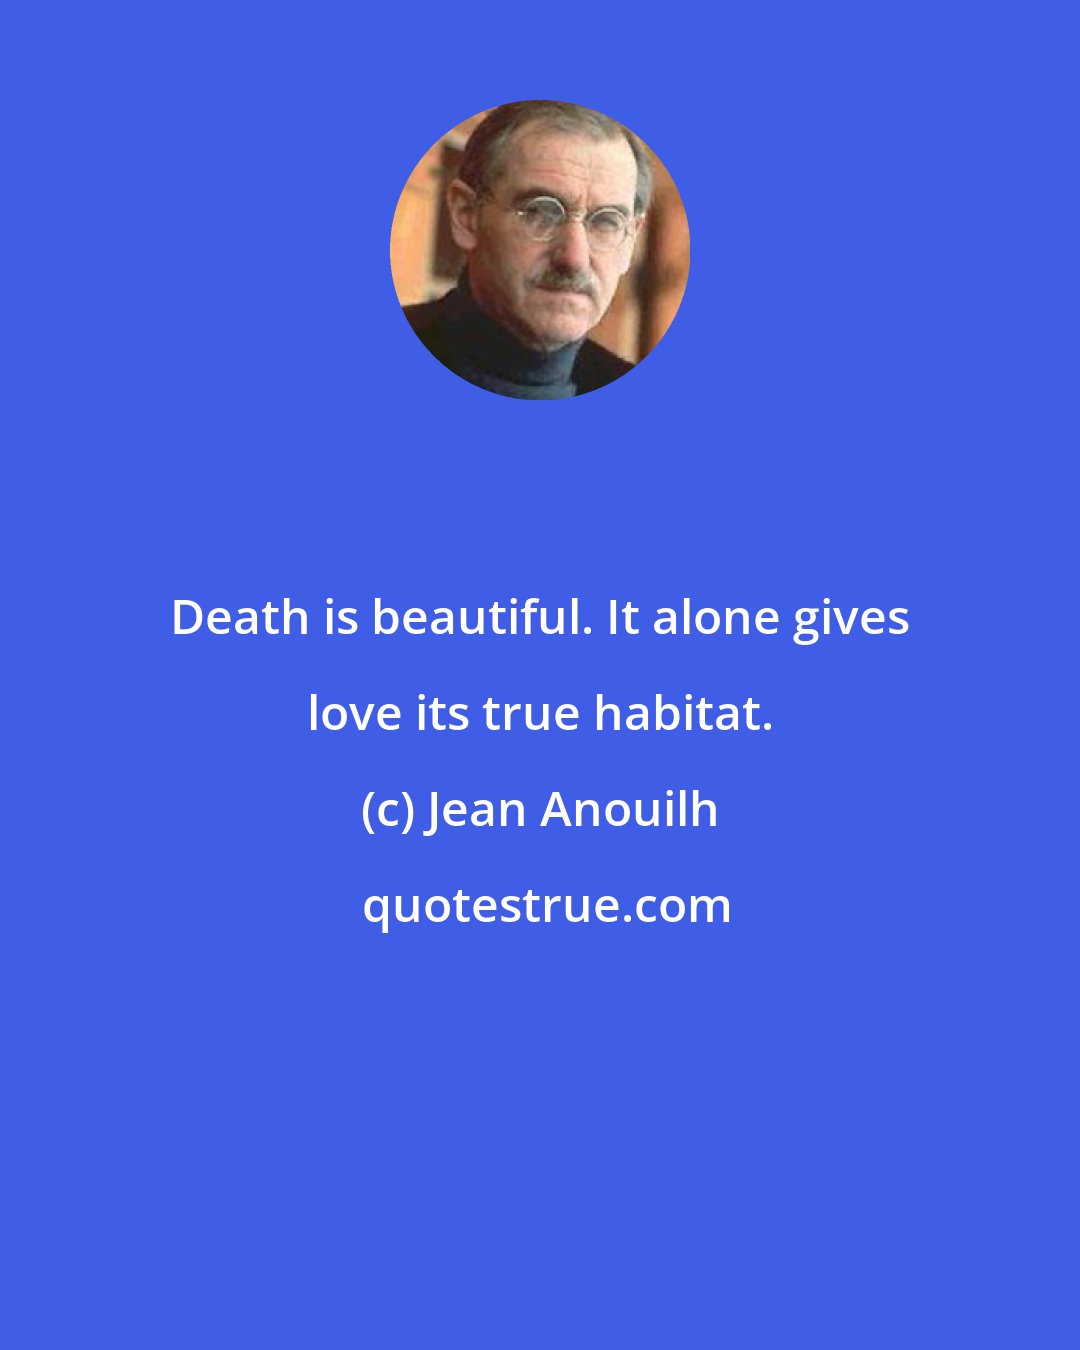 Jean Anouilh: Death is beautiful. It alone gives love its true habitat.